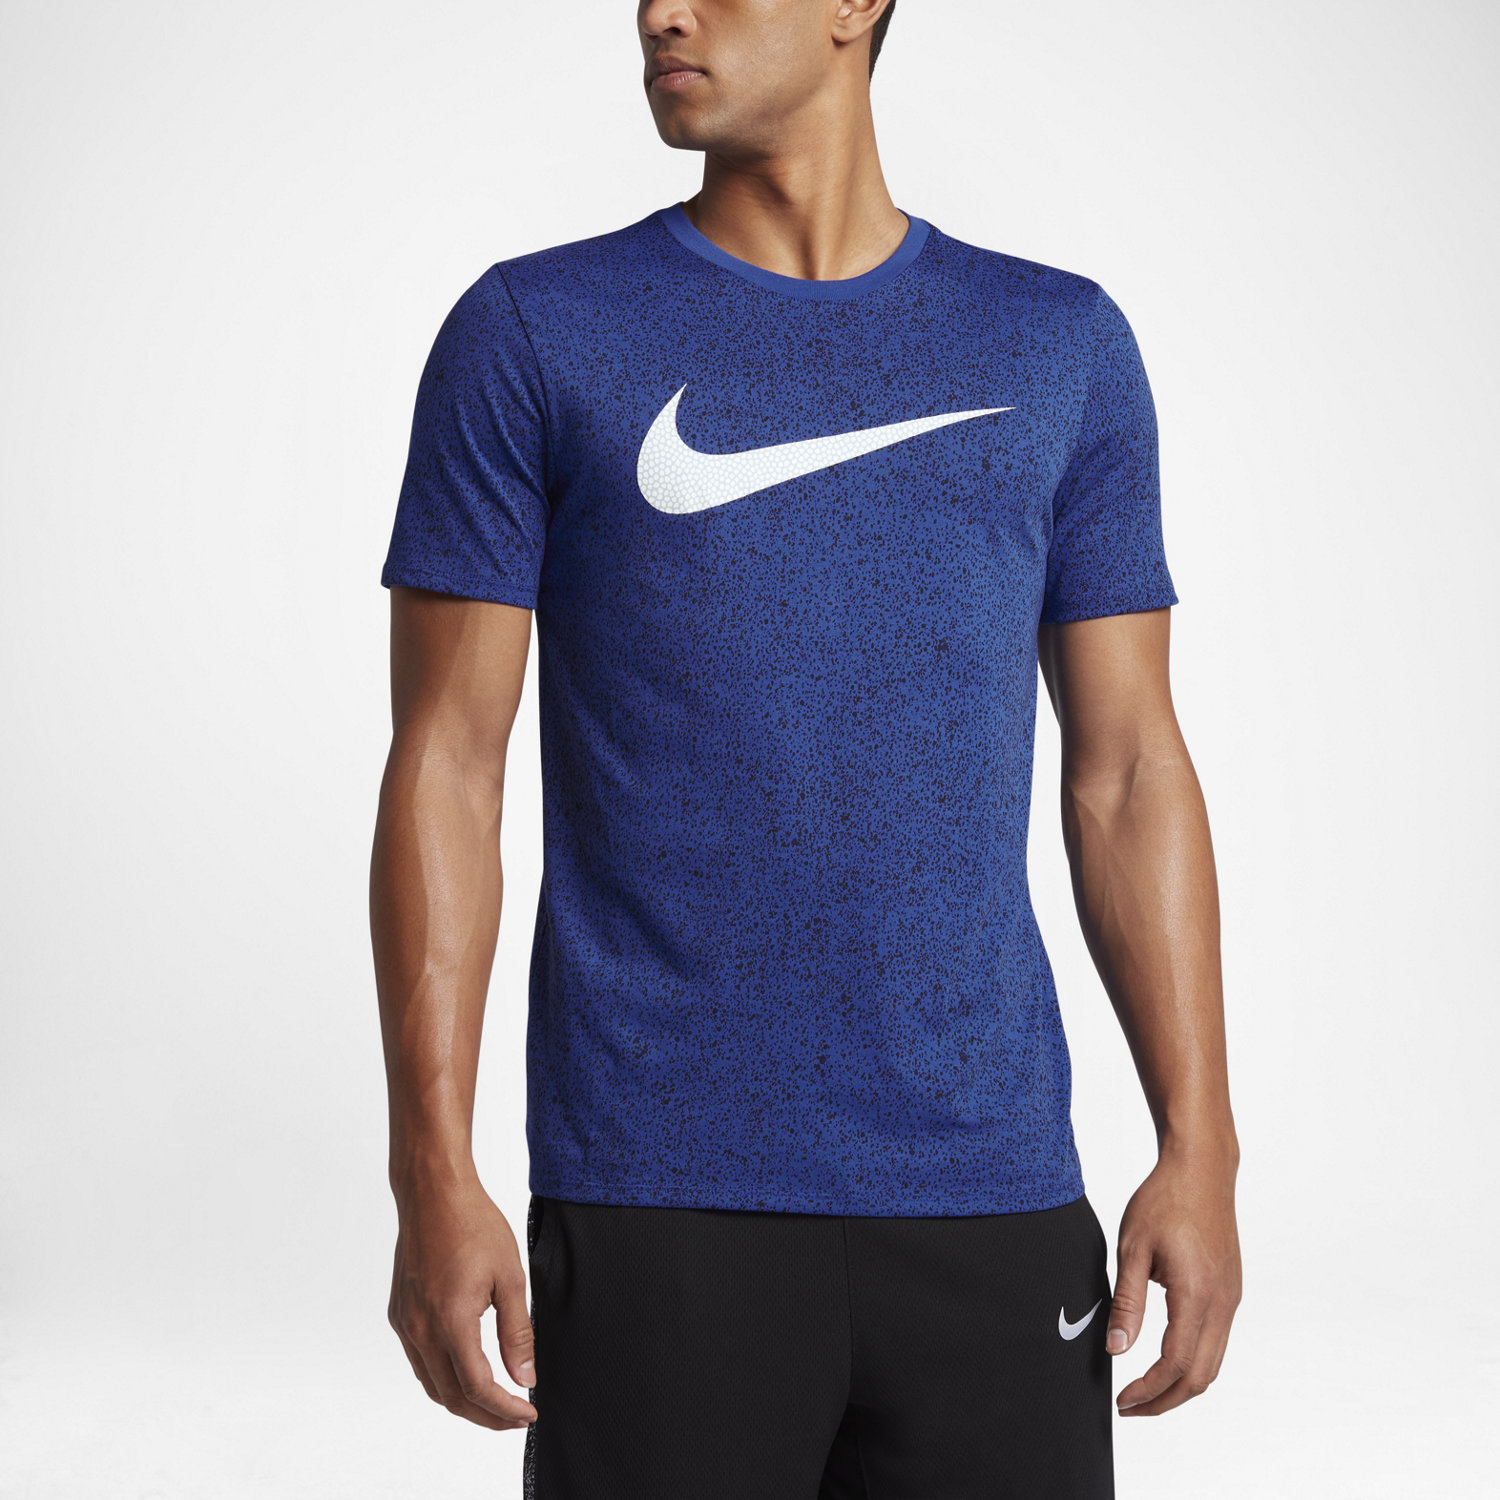 Nike Dry Core - Men's Basketball T-Shirt